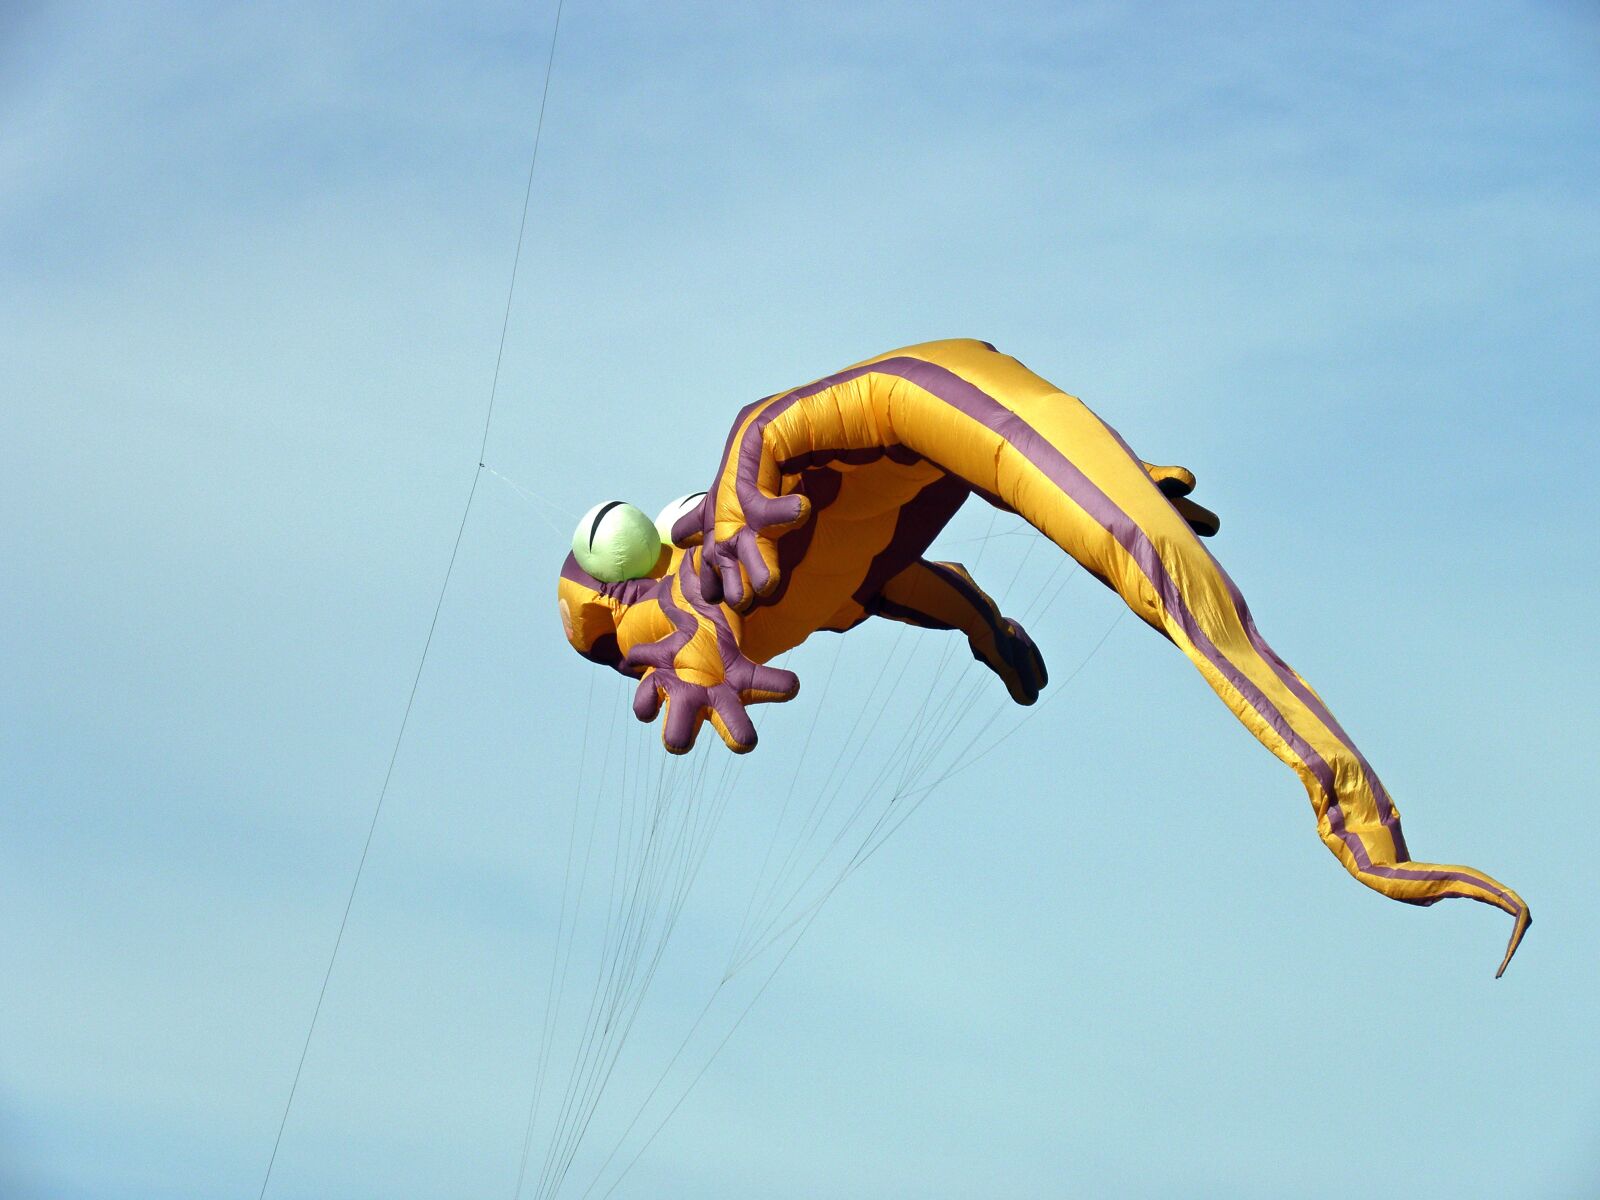 Olympus SP590UZ sample photo. Kite, lizard kite, flying photography